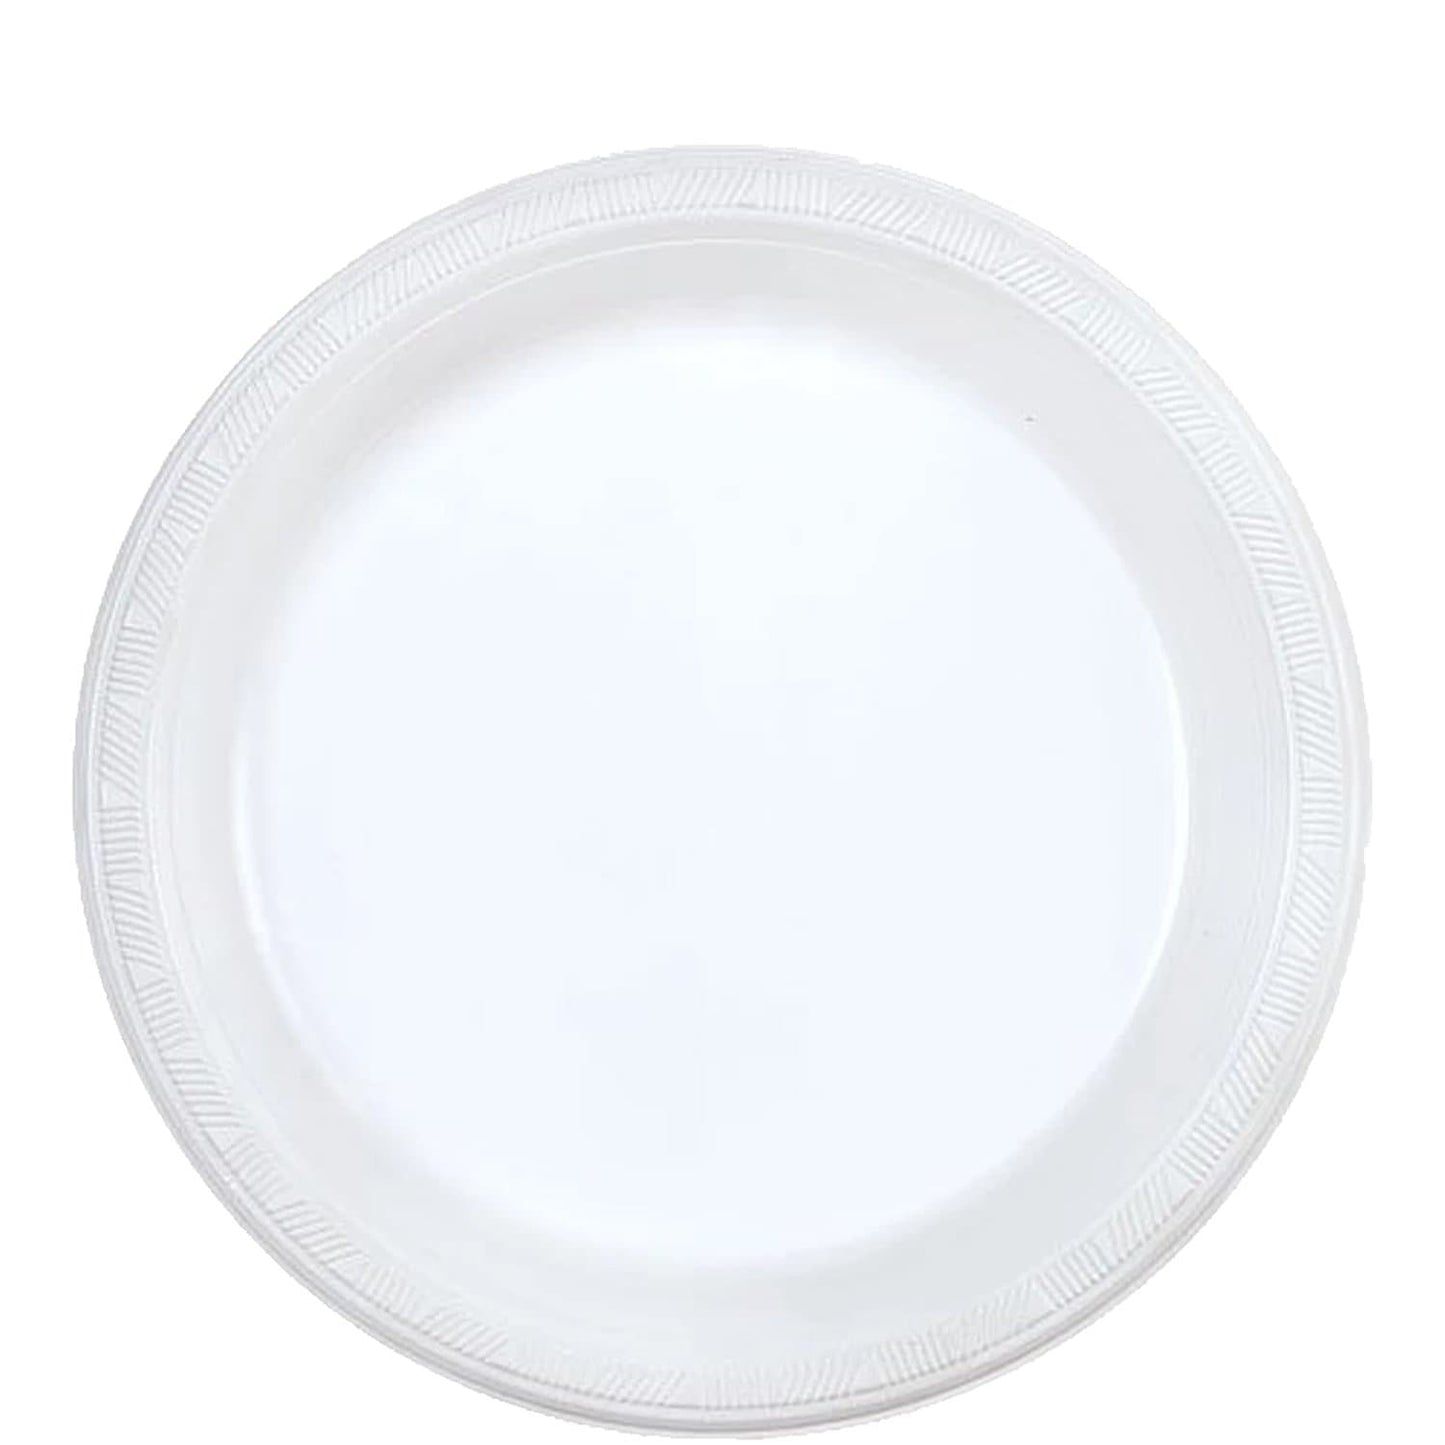 Hanna K. Signature White heavyweight  plastic Plates 9" Plastic Plates Hanna K Signature 100 PIECES  